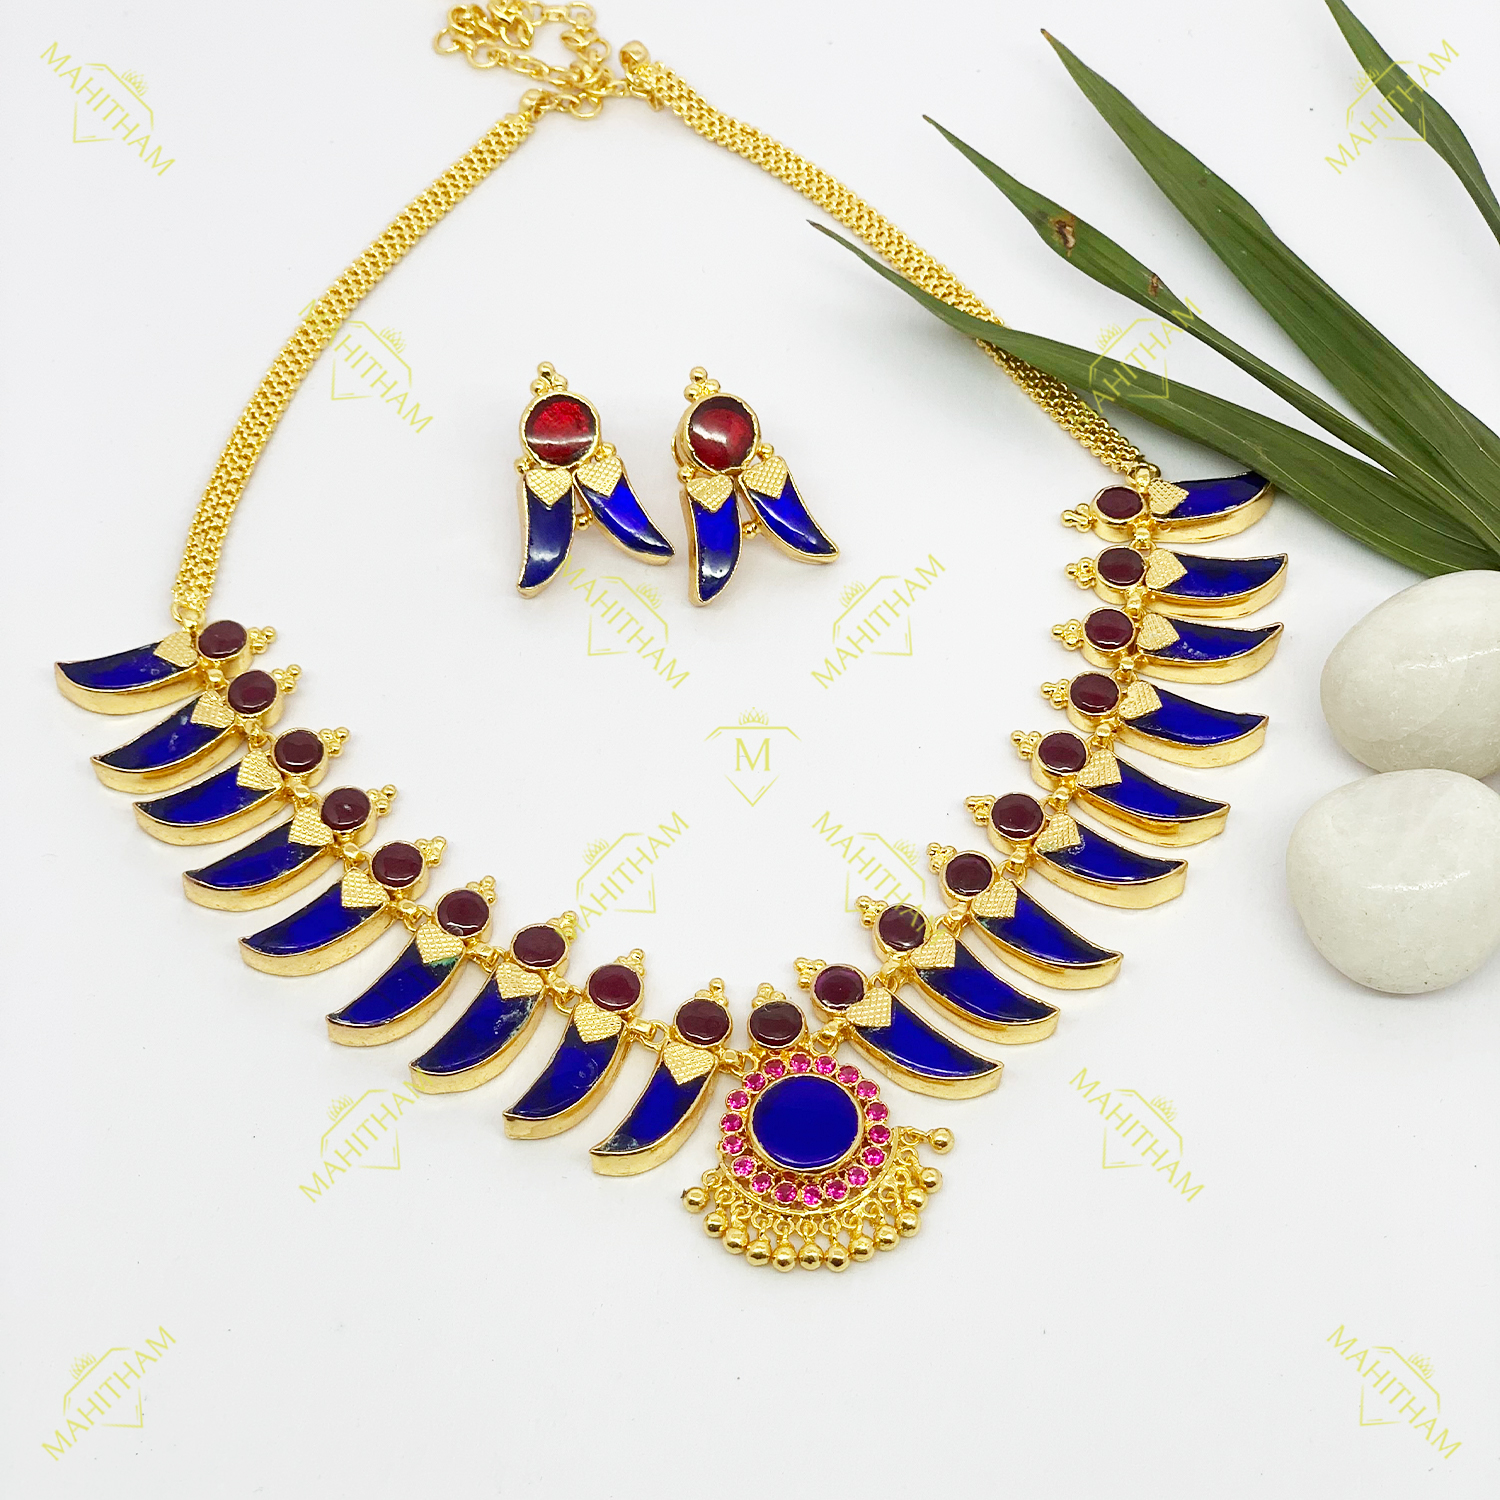 Shop Gold N Blue Necklace Set Party Wear Online at Best Price | Cbazaar